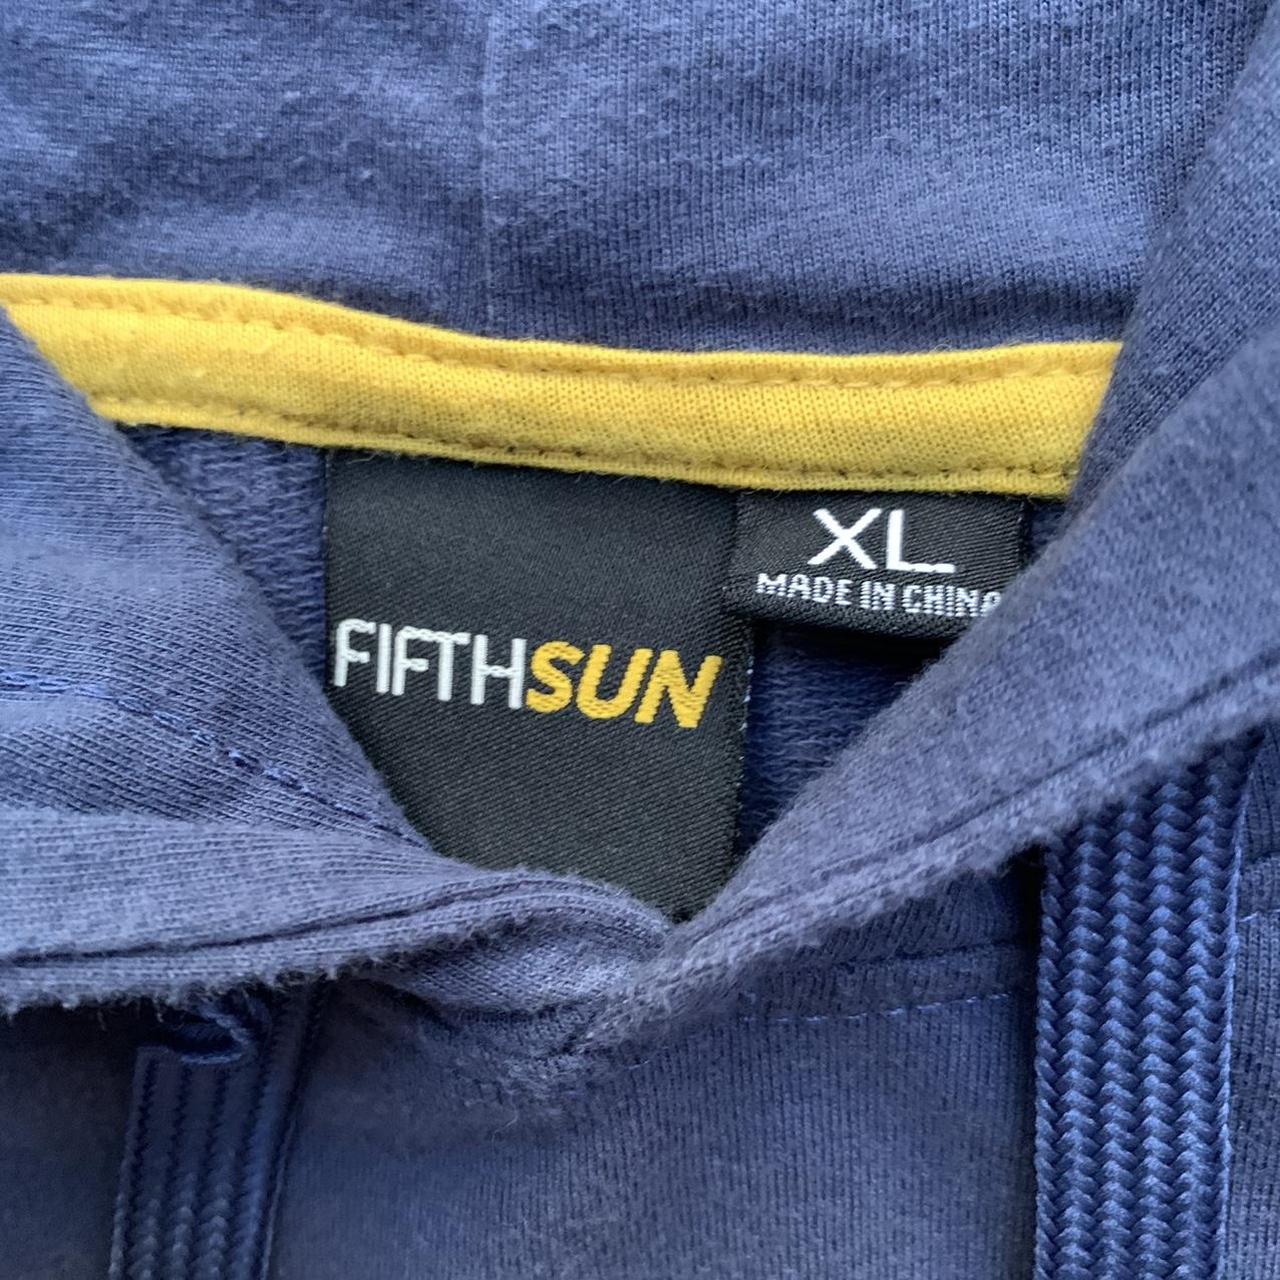 Fifth Sun Men's Navy and Yellow T-shirt (4)